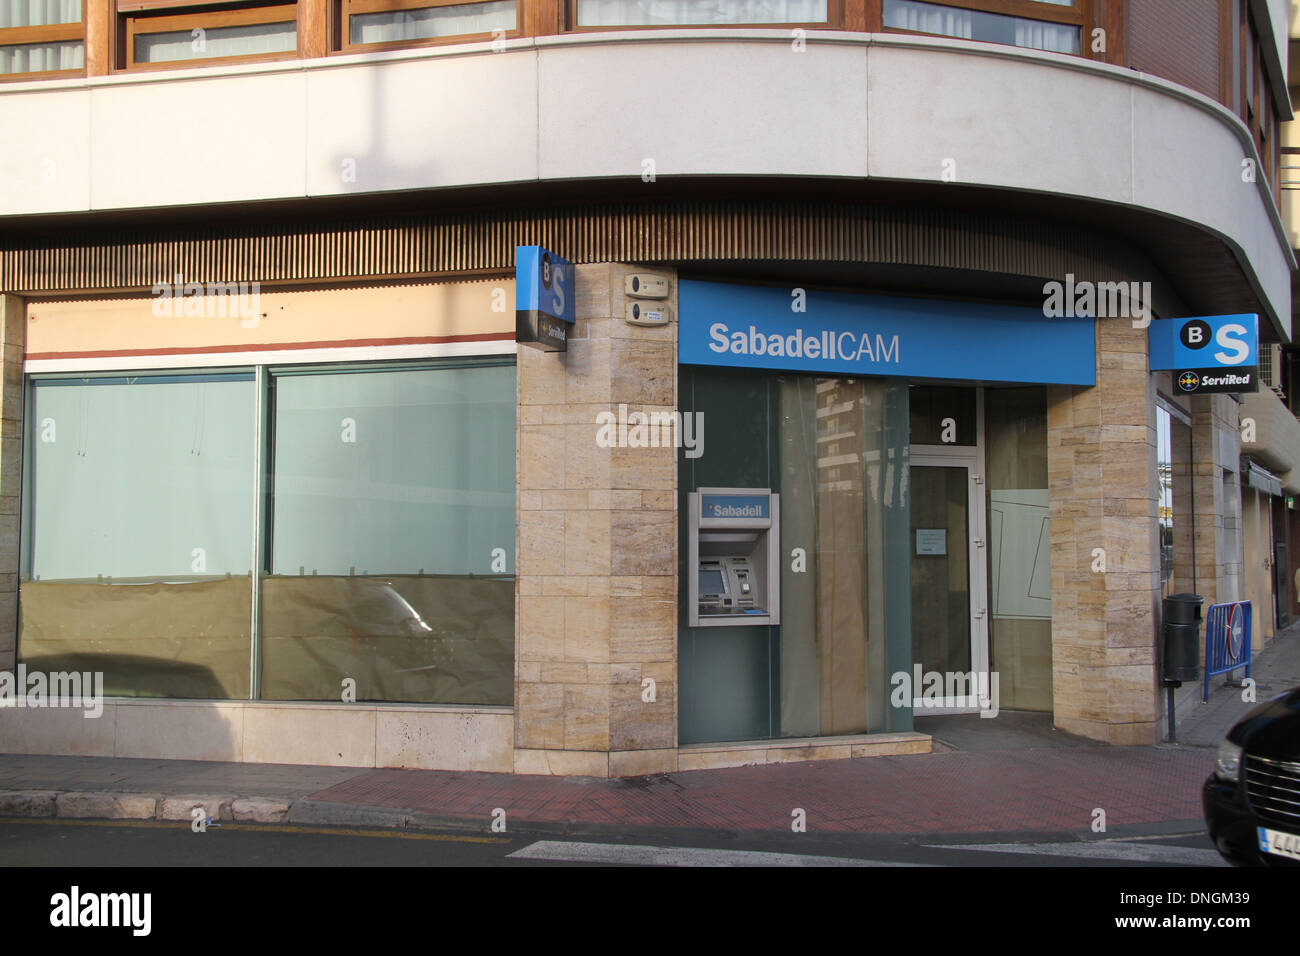 Spain Bank Closure, Sabadell Cam Stock Photo - Alamy